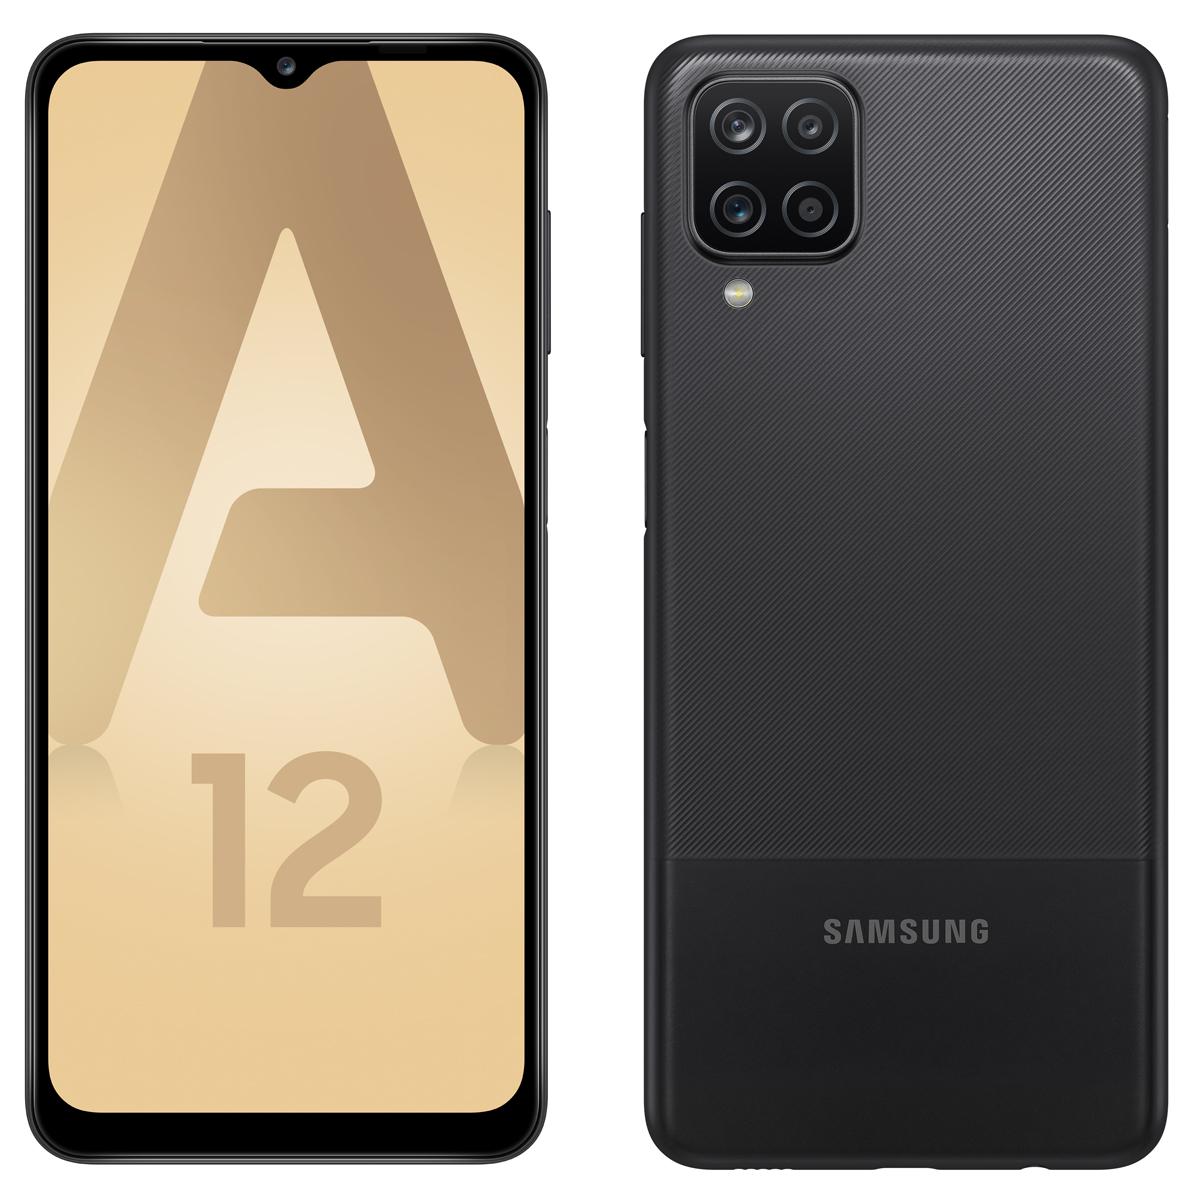 Samsung - Galaxy A12 - 64 Go - Noir - Smartphone Android